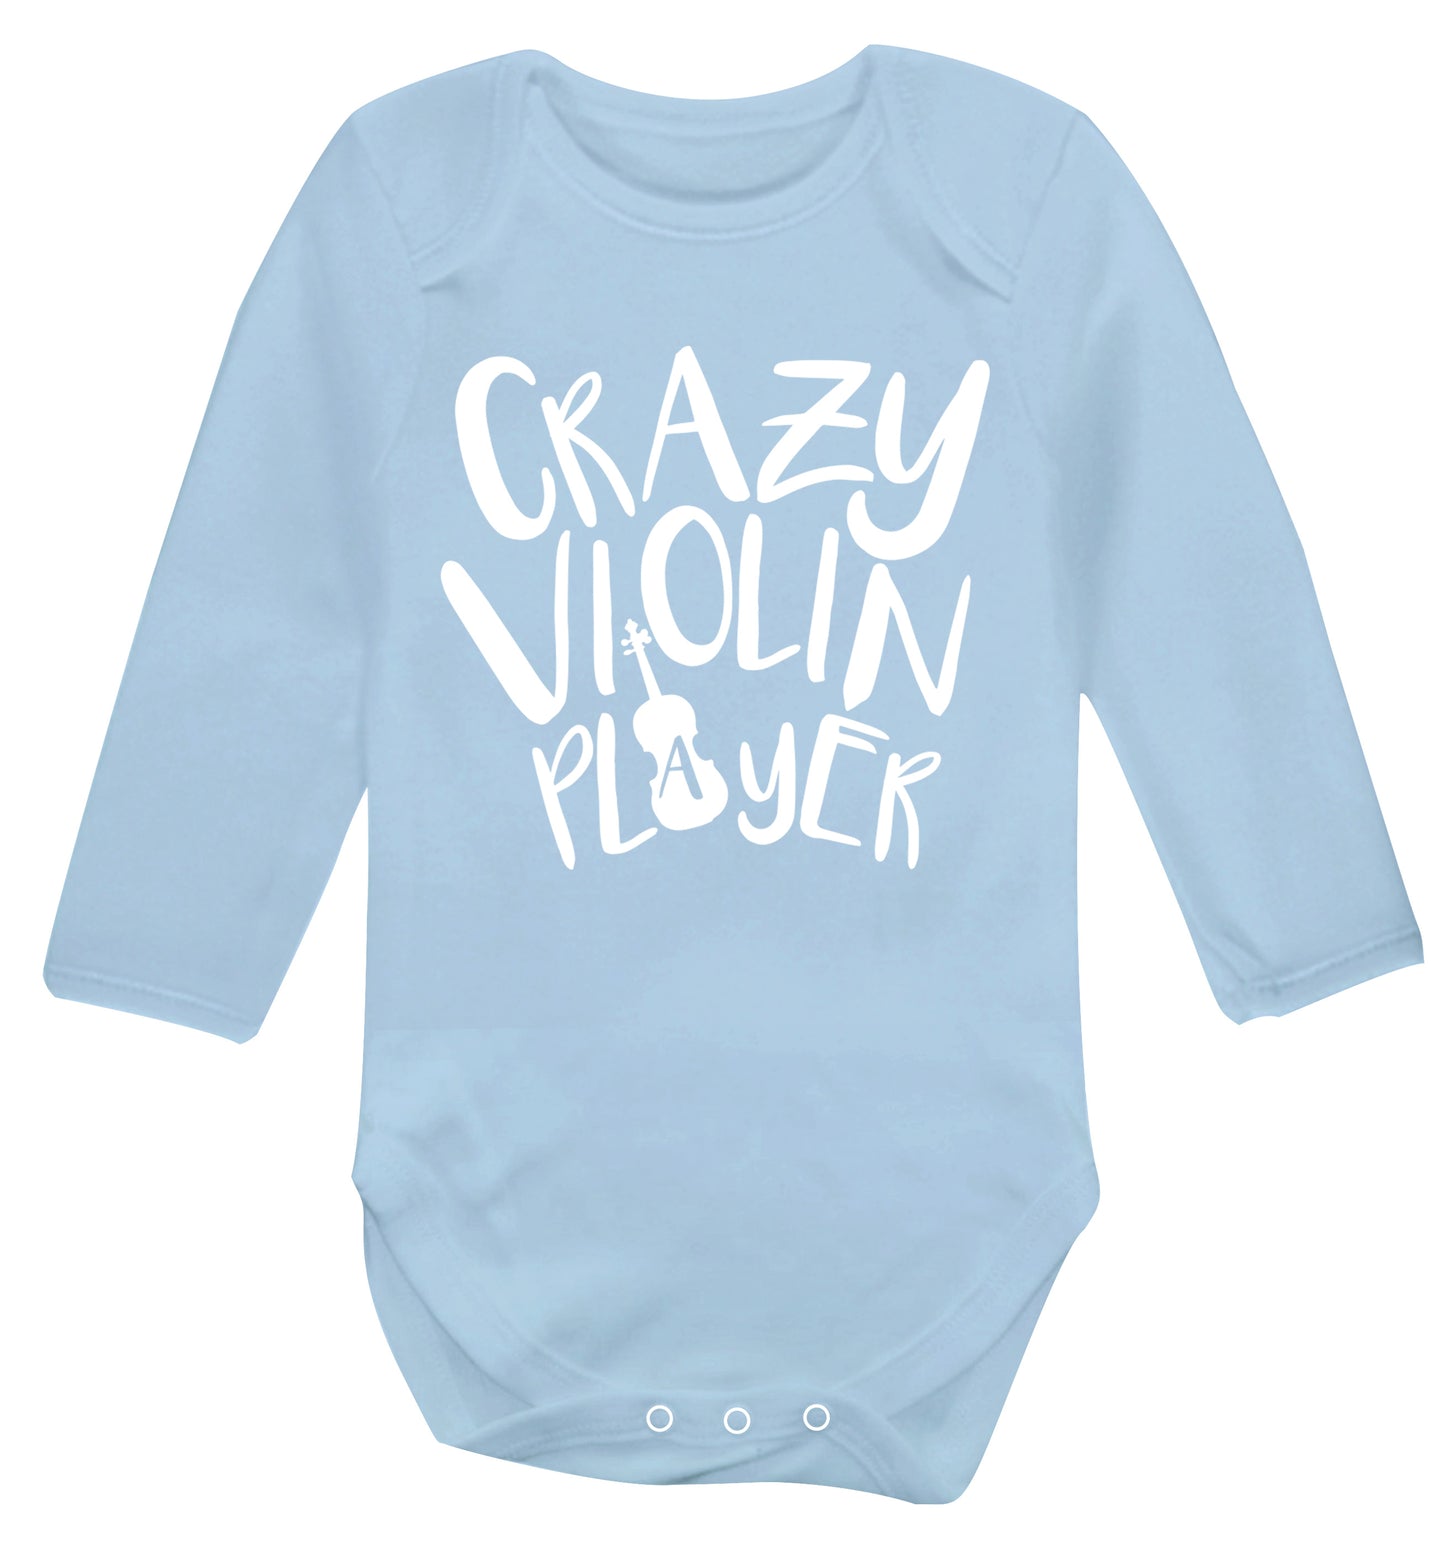 Crazy Violin Player Baby Vest long sleeved pale blue 6-12 months